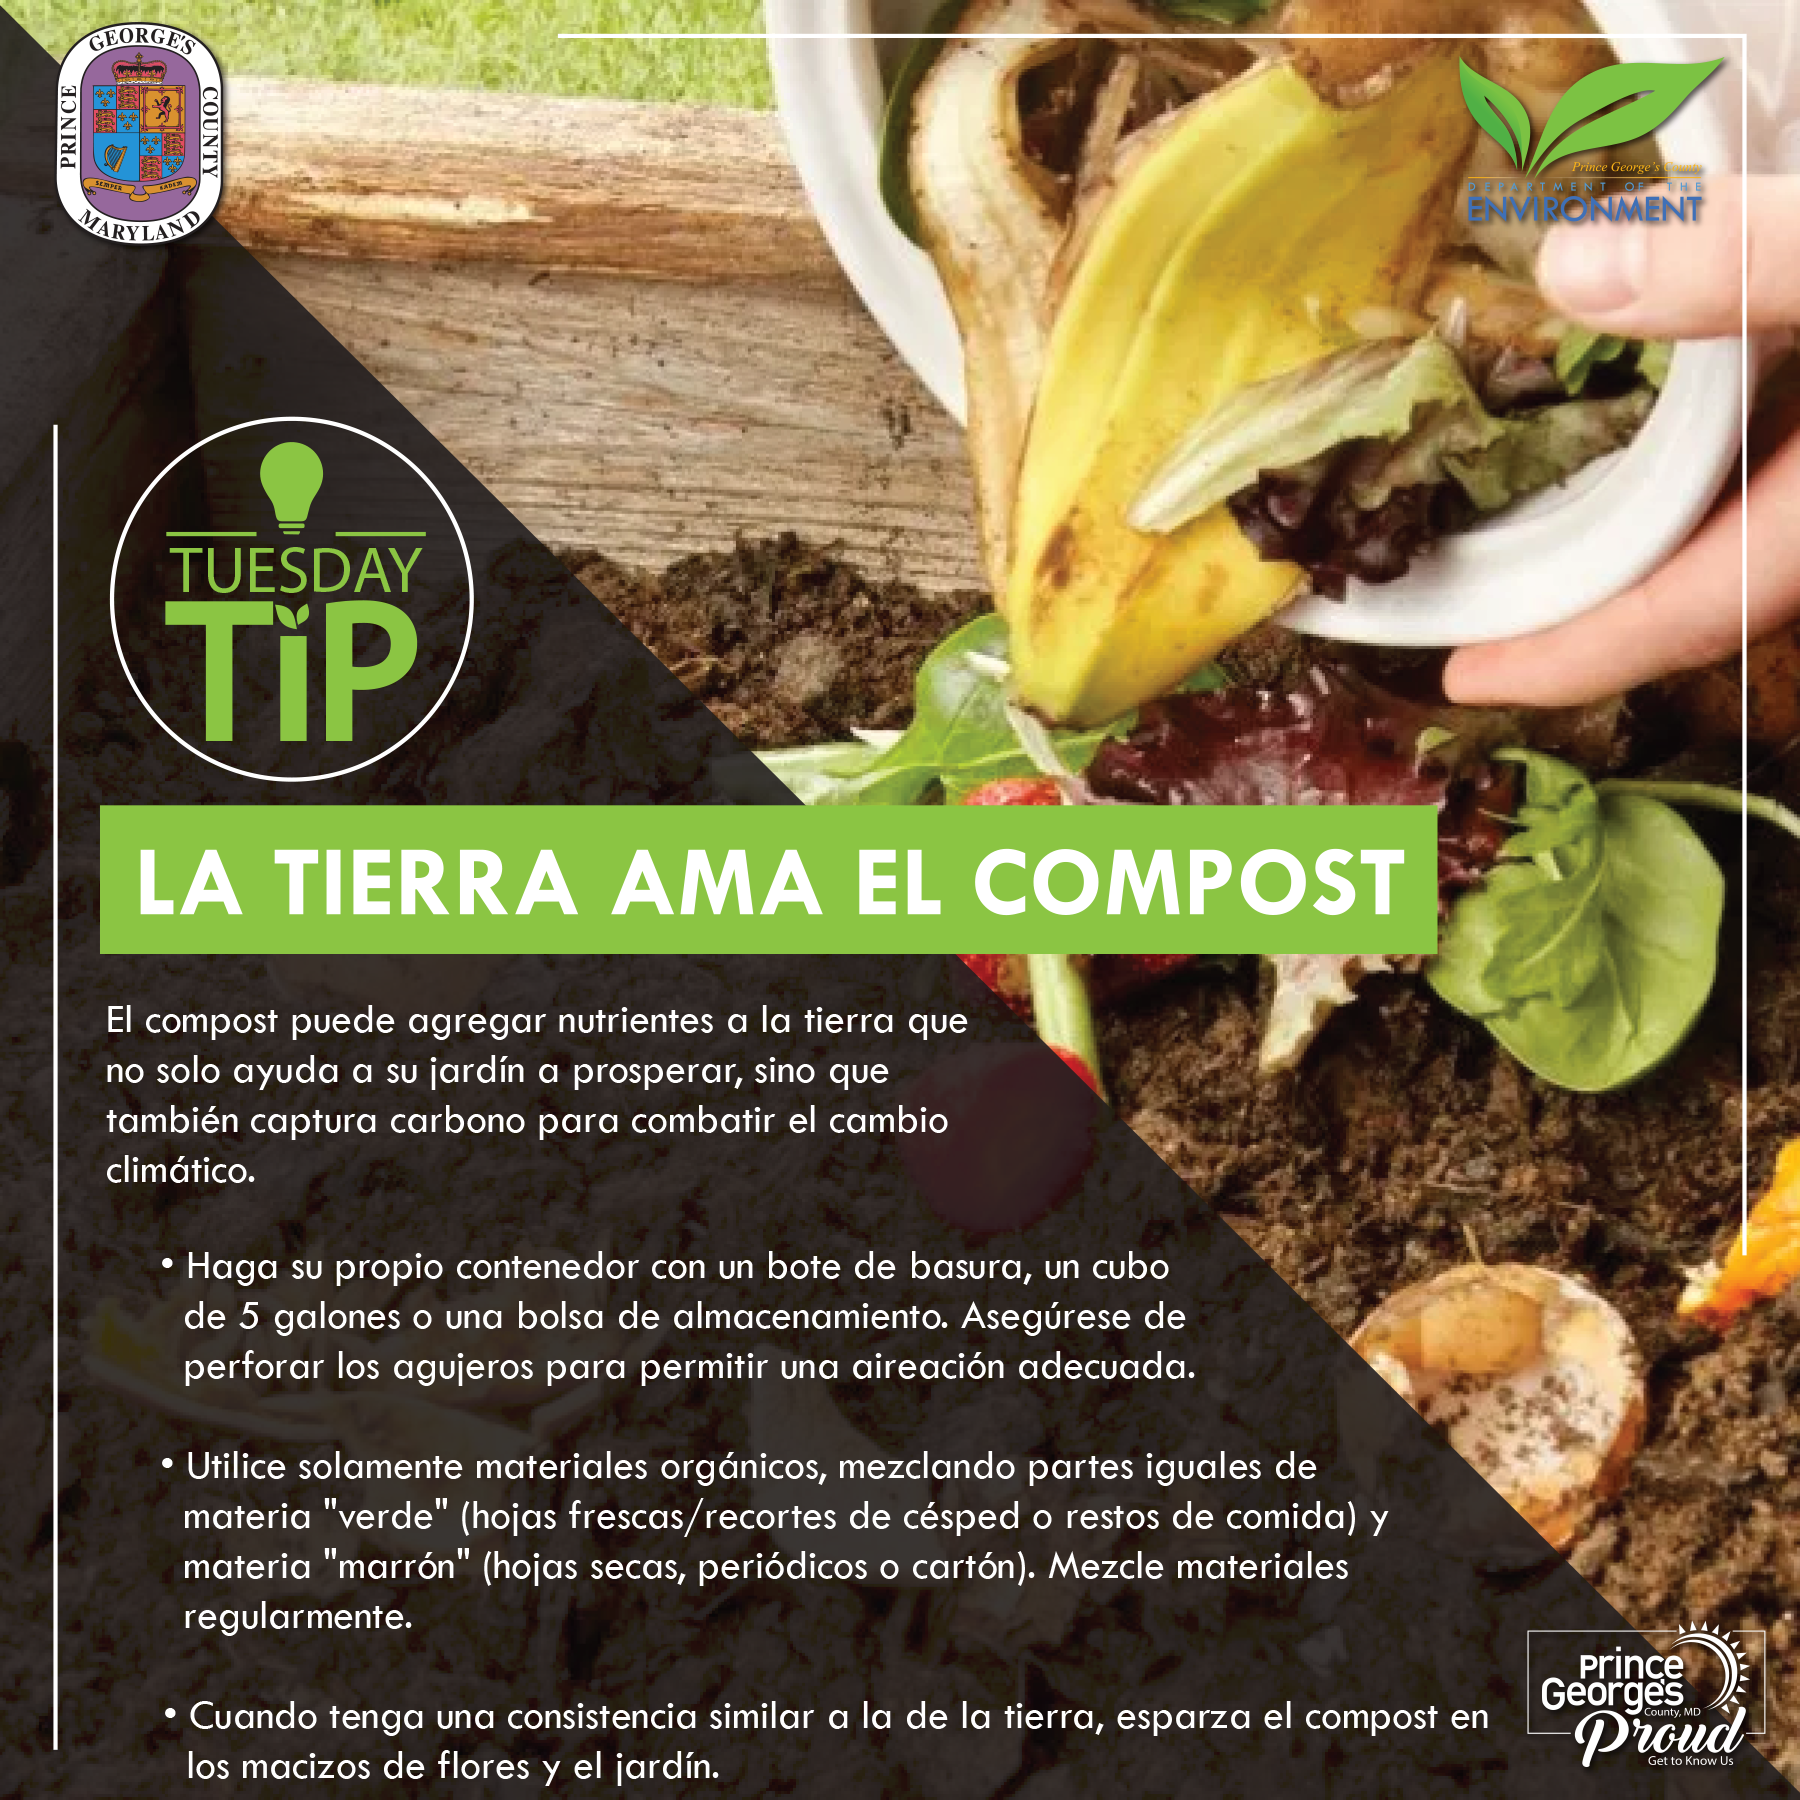 Tues tip 5.5.20 soil loves compost sp